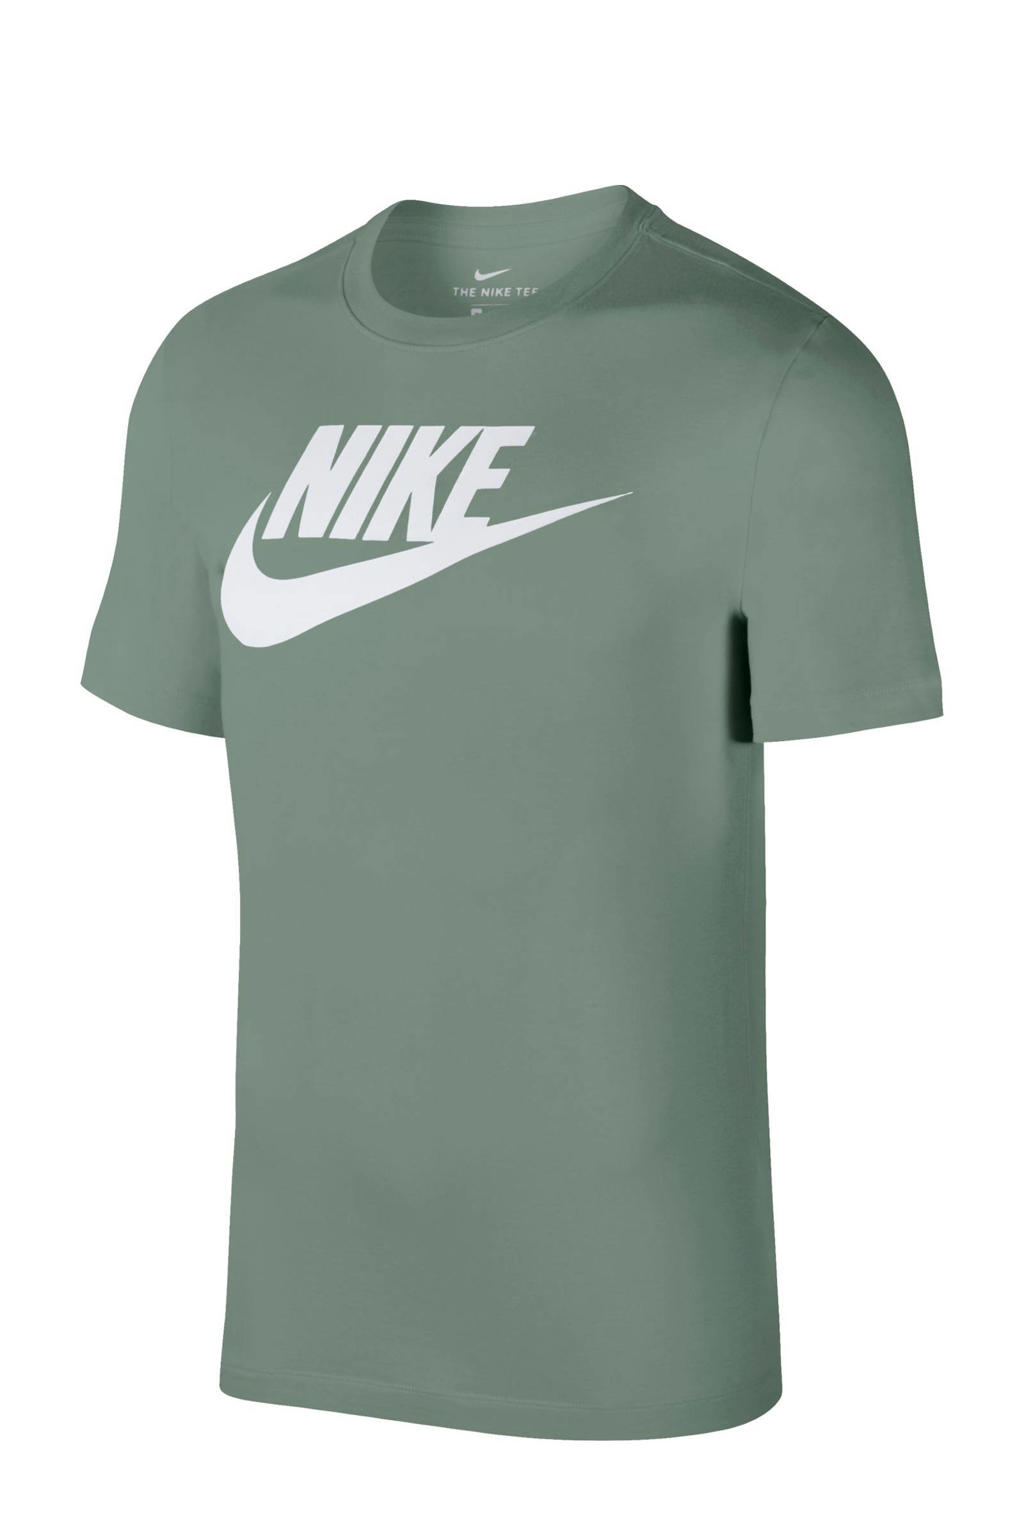 Nike T-shirt mintgroen